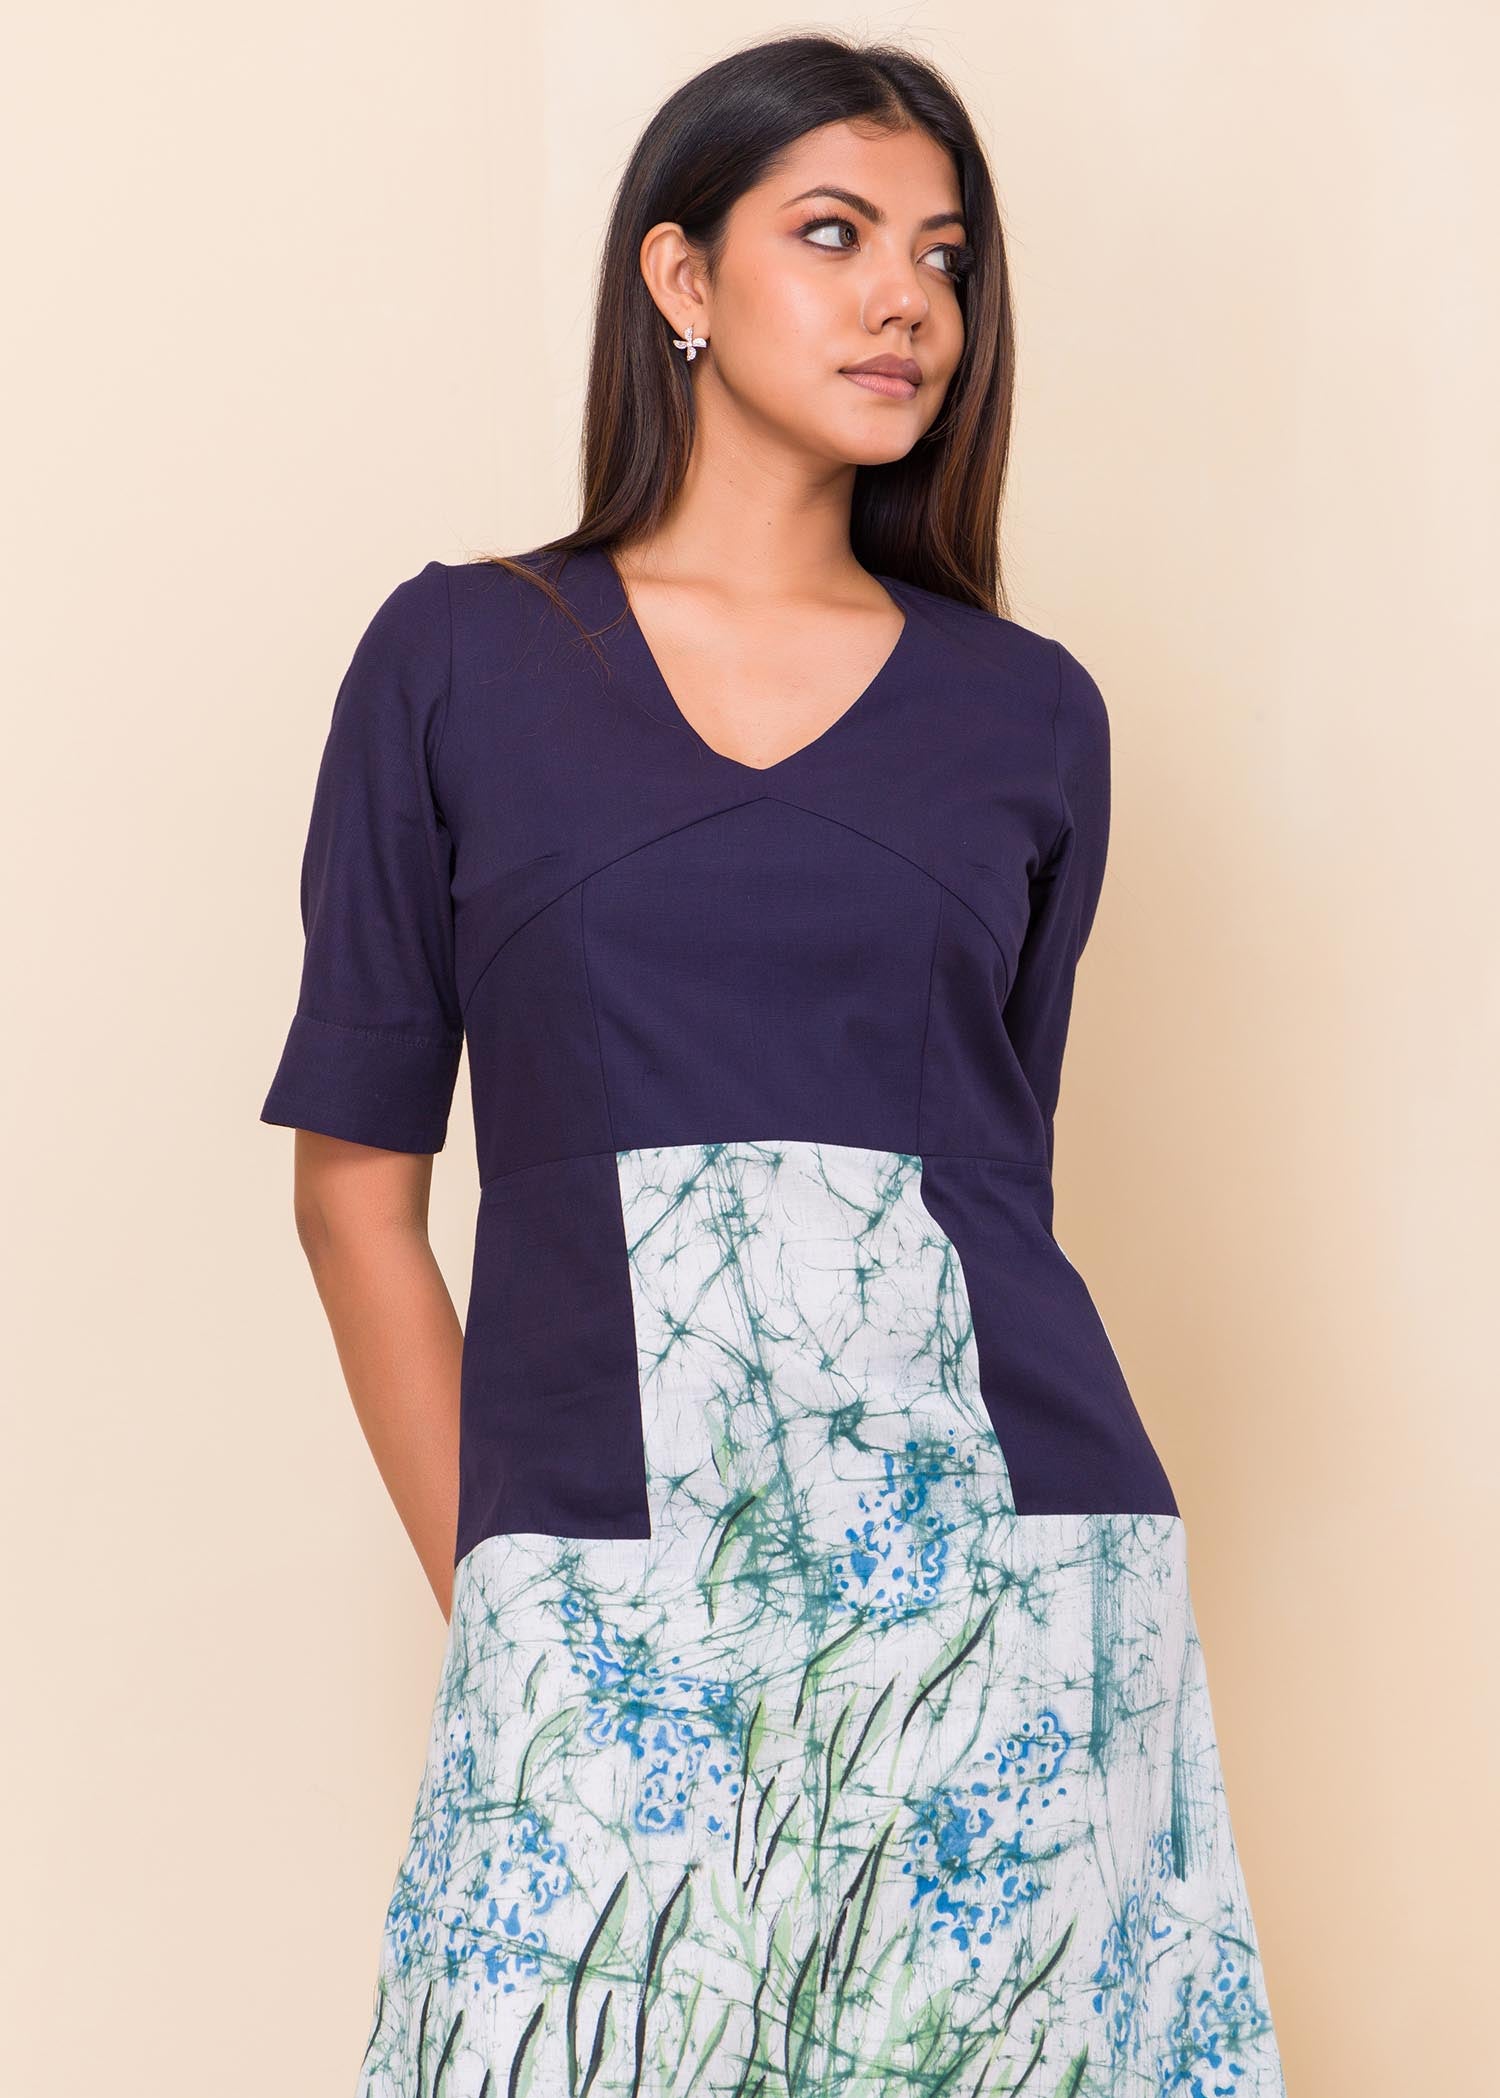 Lavender Inspired Batik Dress